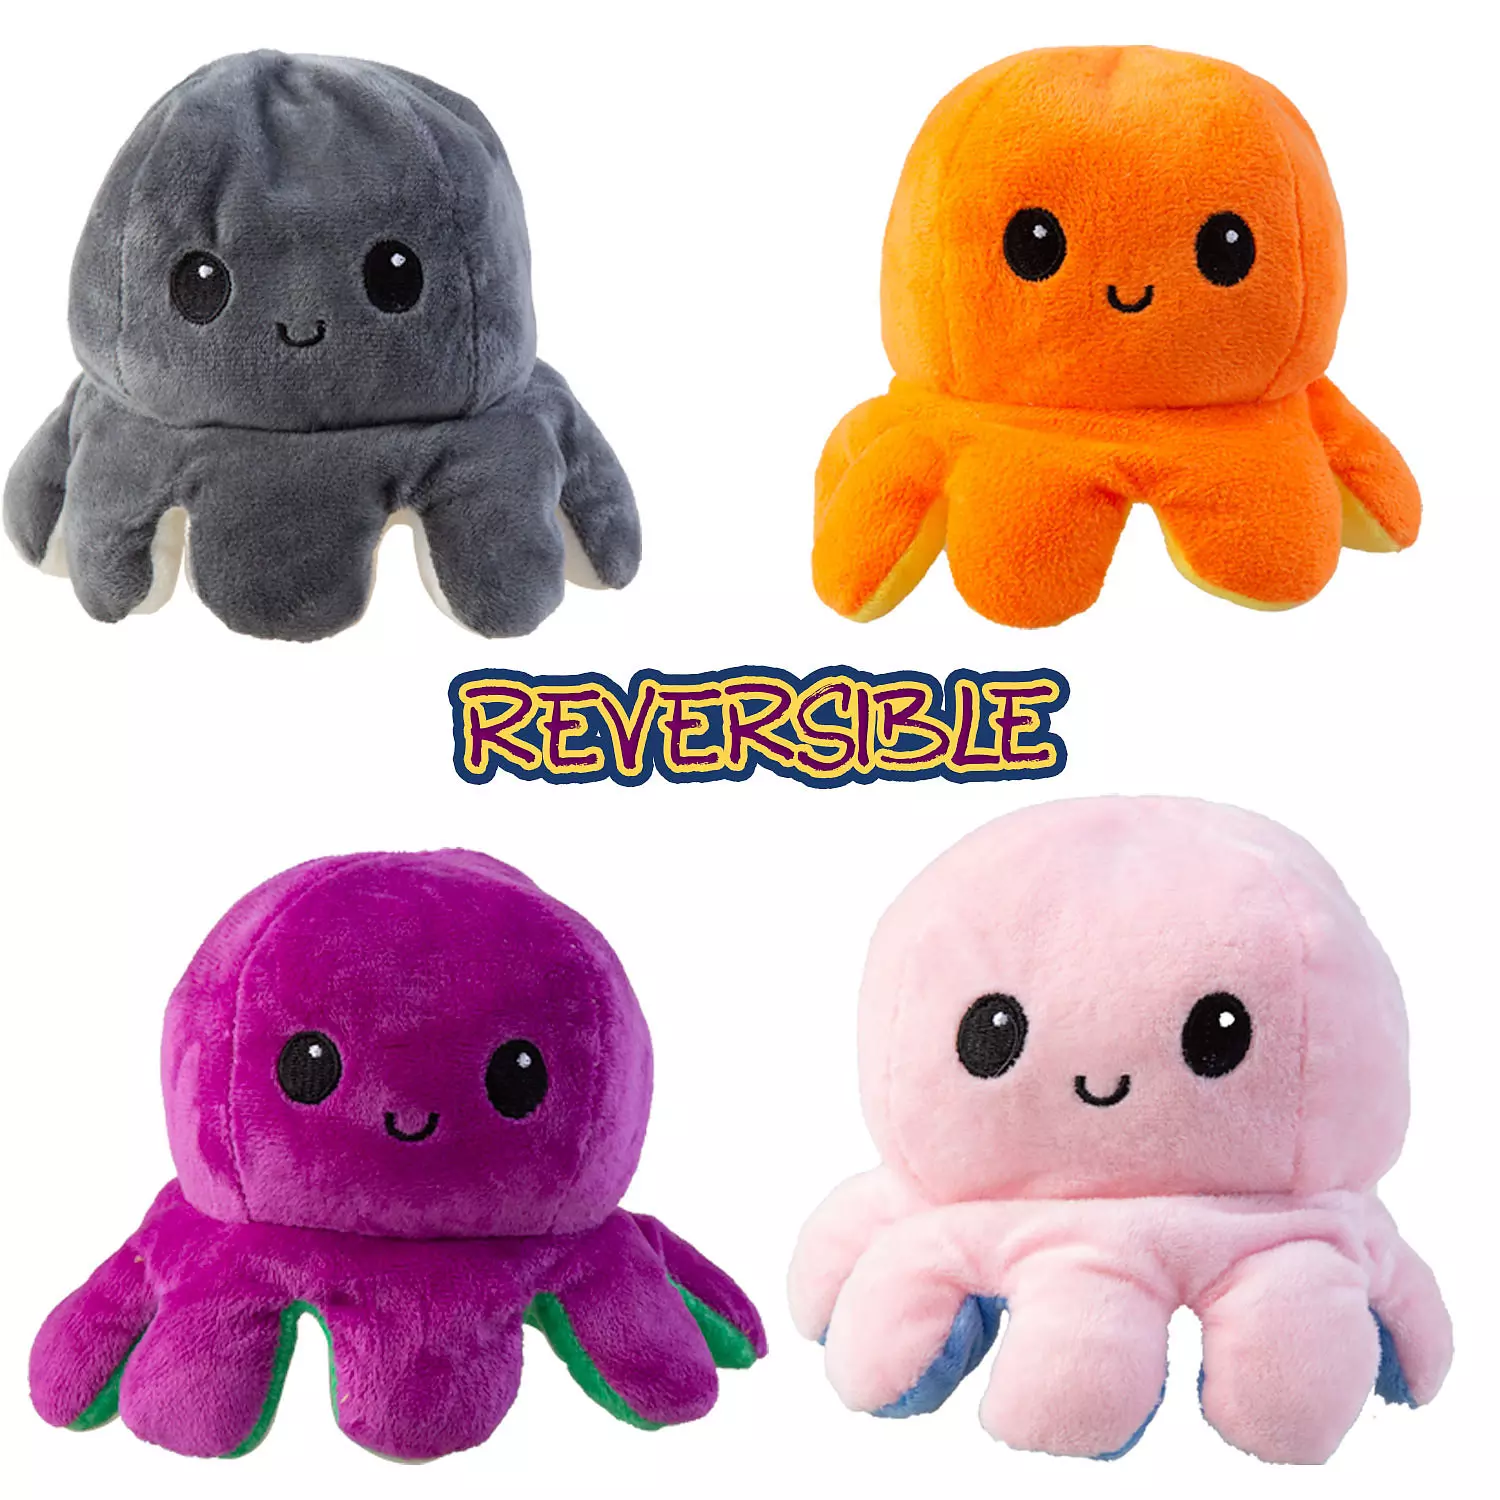 Happy/sad reversible octopus plush toy, 1 piece